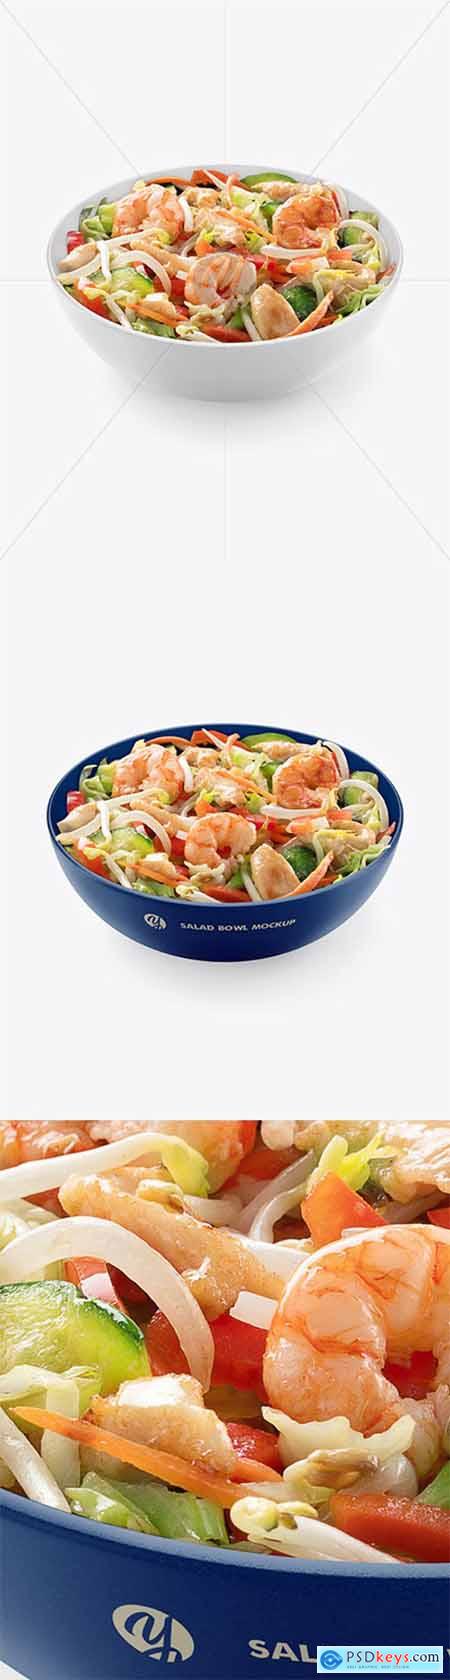 Download Salad W Shrimps In A Bowl Mockup 60725 Free Download Photoshop Vector Stock Image Via Torrent Zippyshare From Psdkeys Com